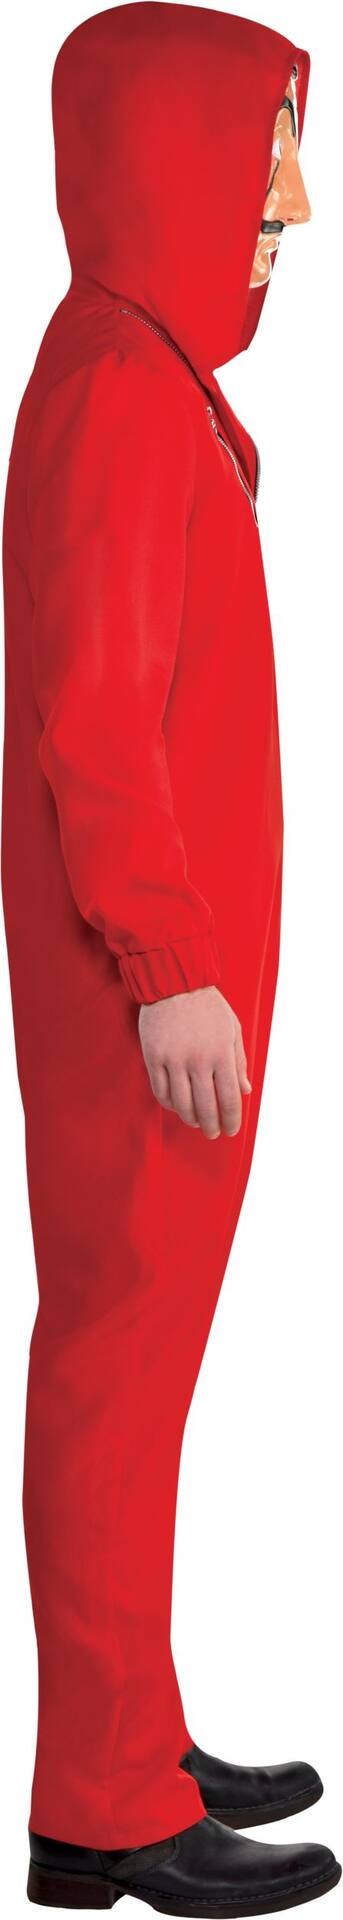 Money Heist La Casa De Papel Dali Red Costume - (Free US Shipping)